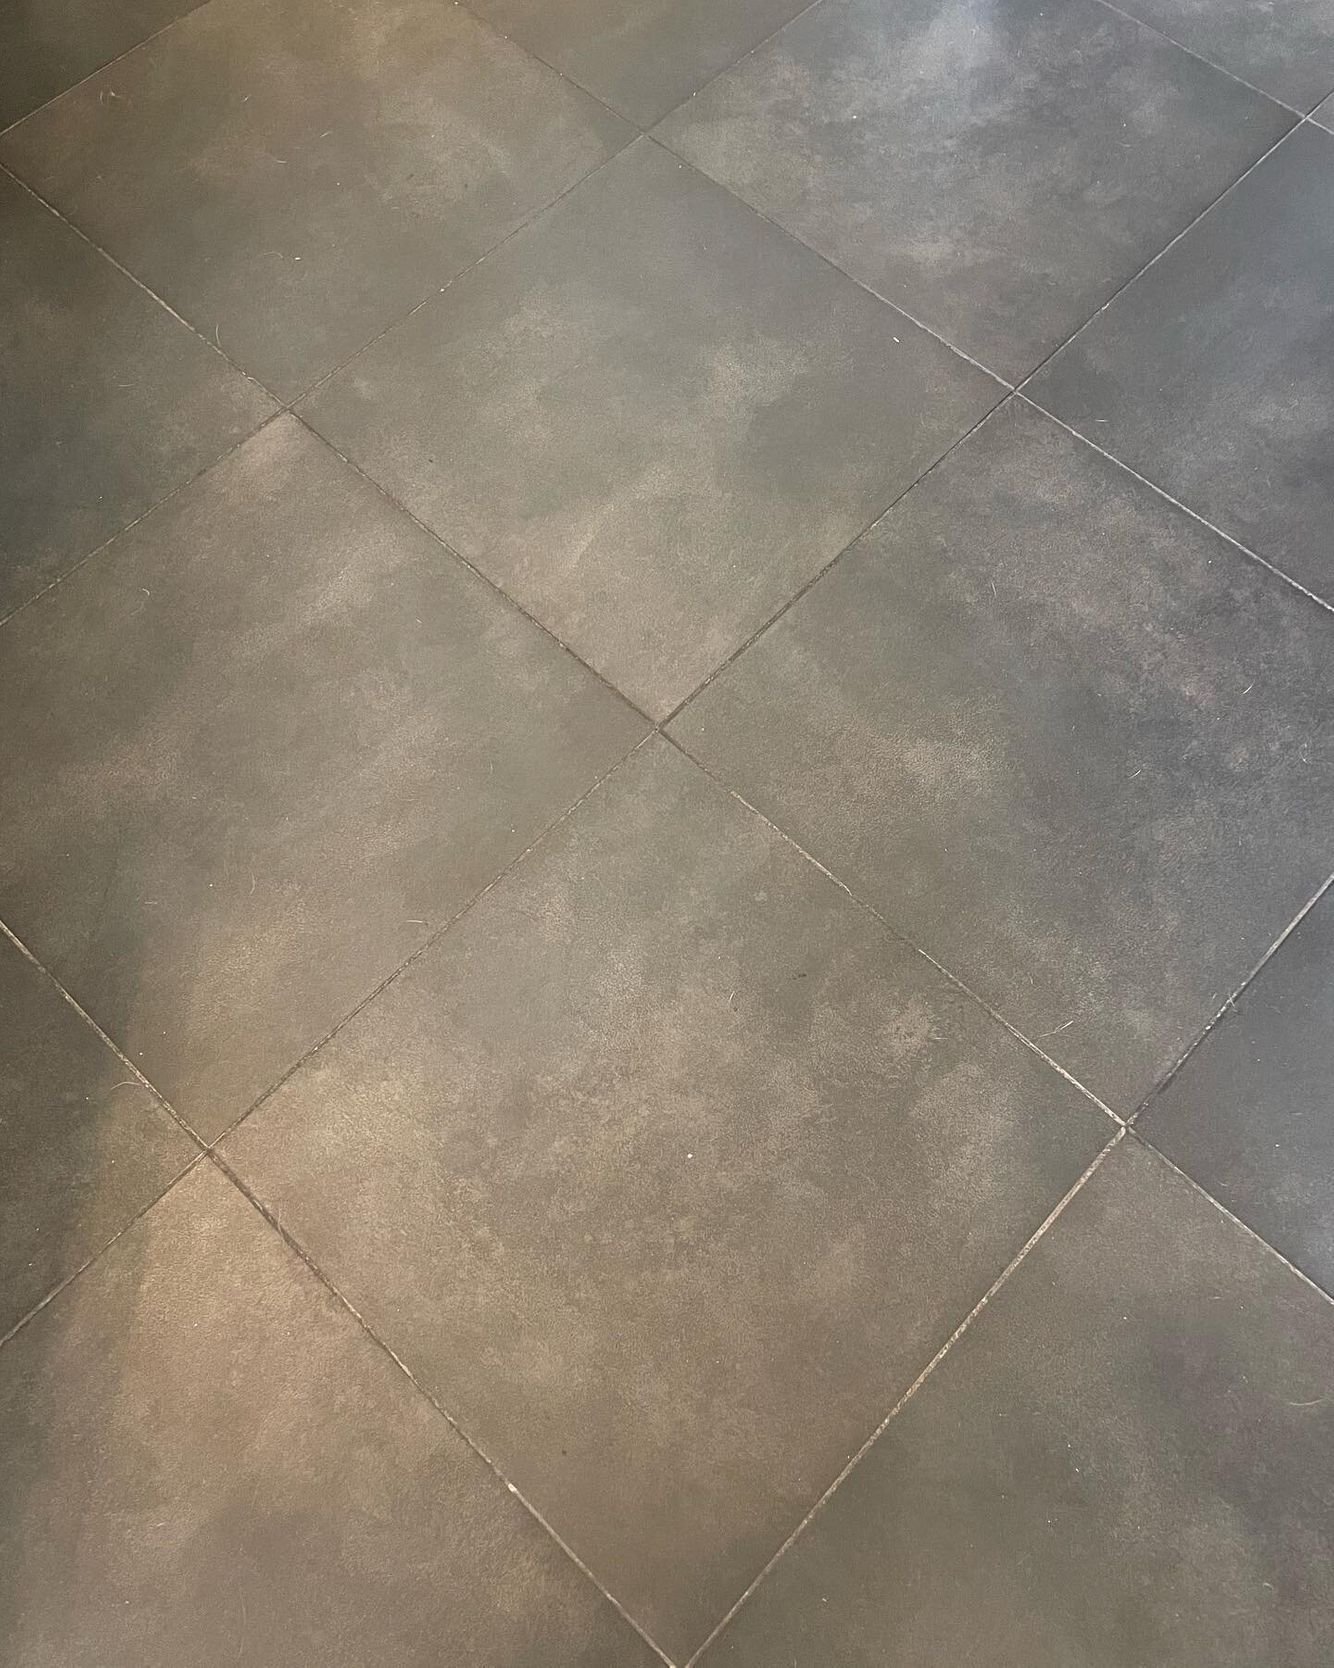 Large gray floor tiles